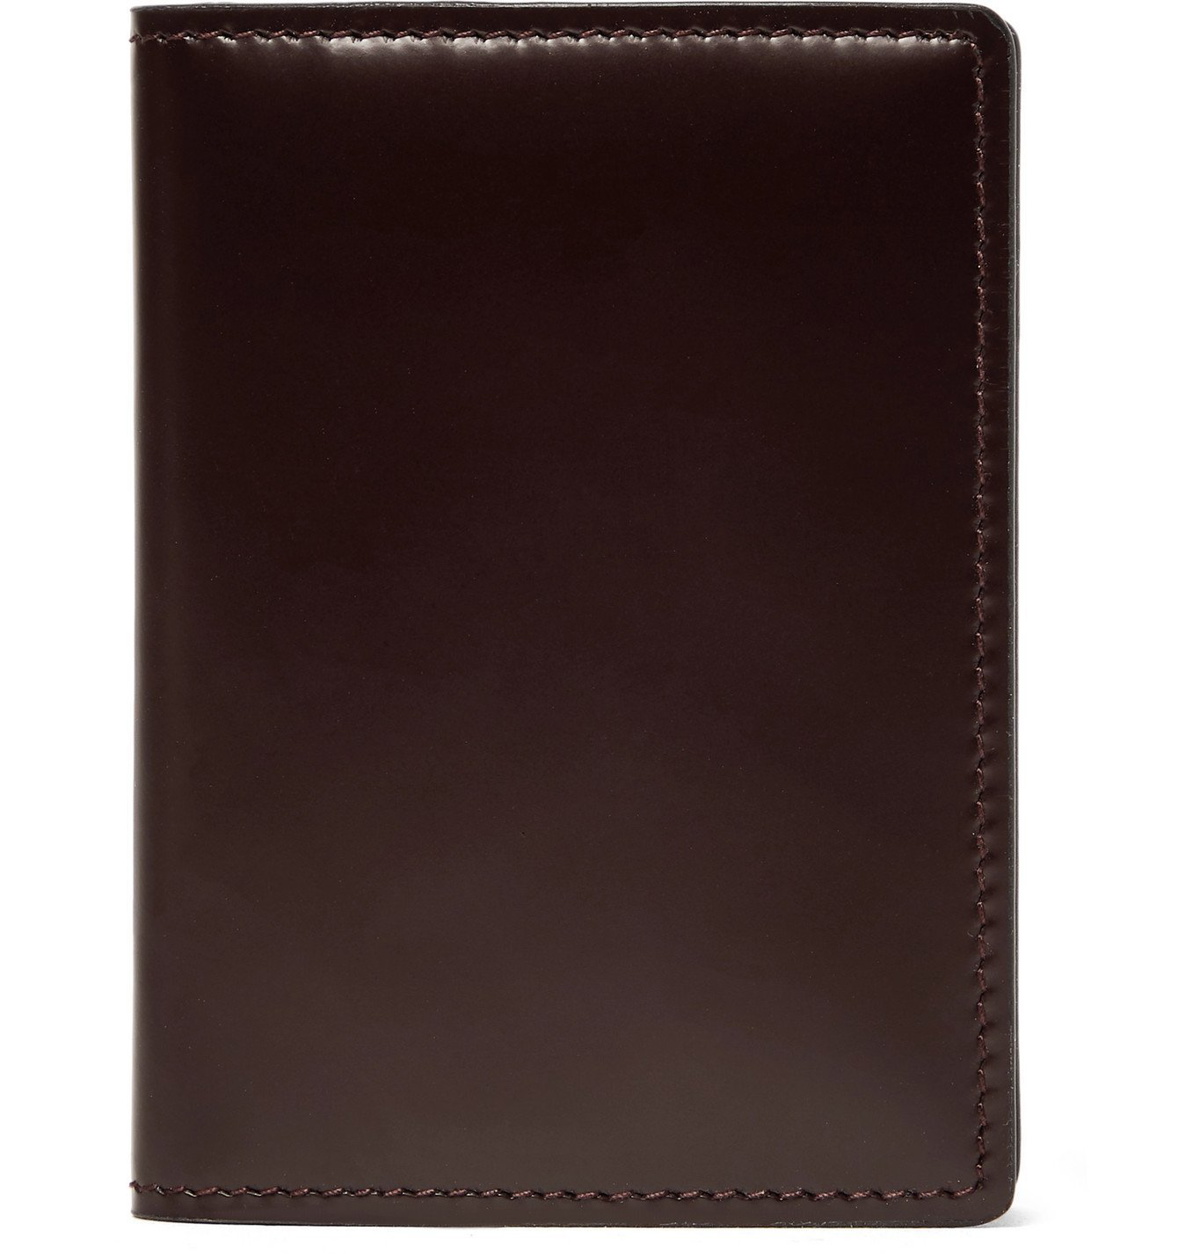 Fendi Men's Black Logo Print Textured 100% Leather Bifold Wallet